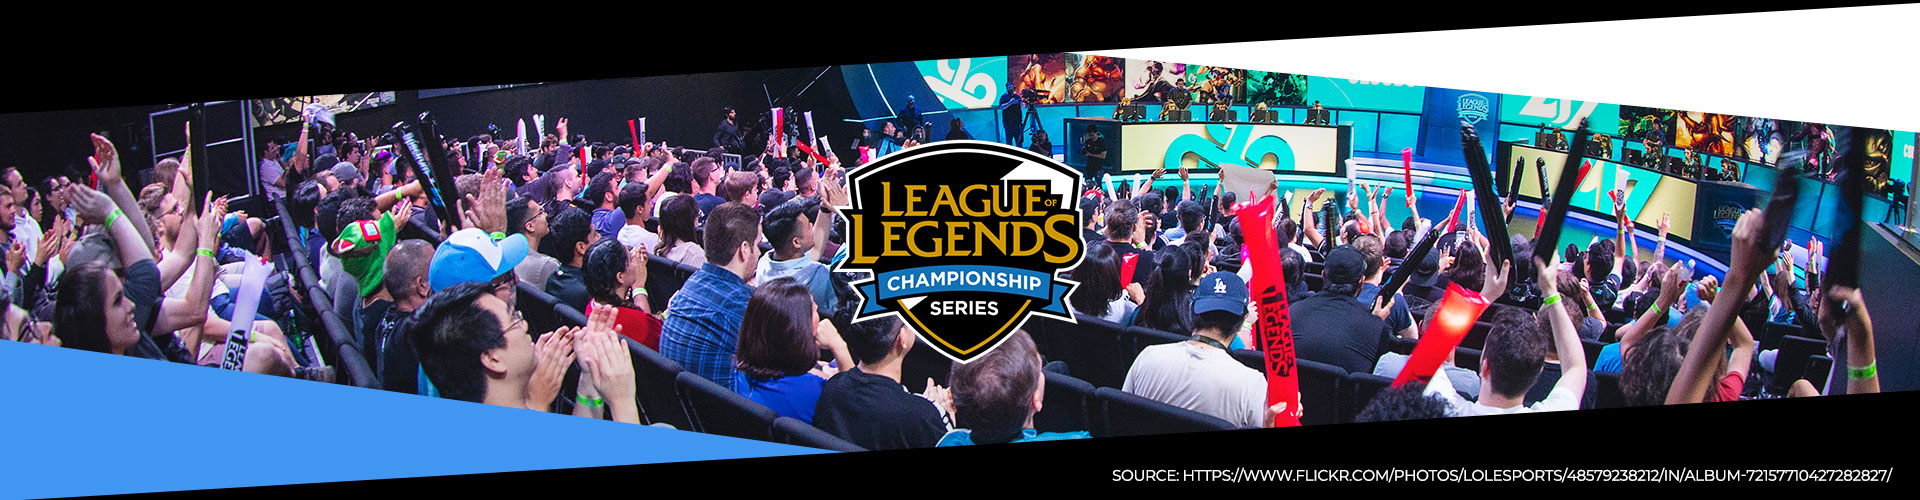 League of Legends Championship Series (LCS) - Kevätkausi 2020